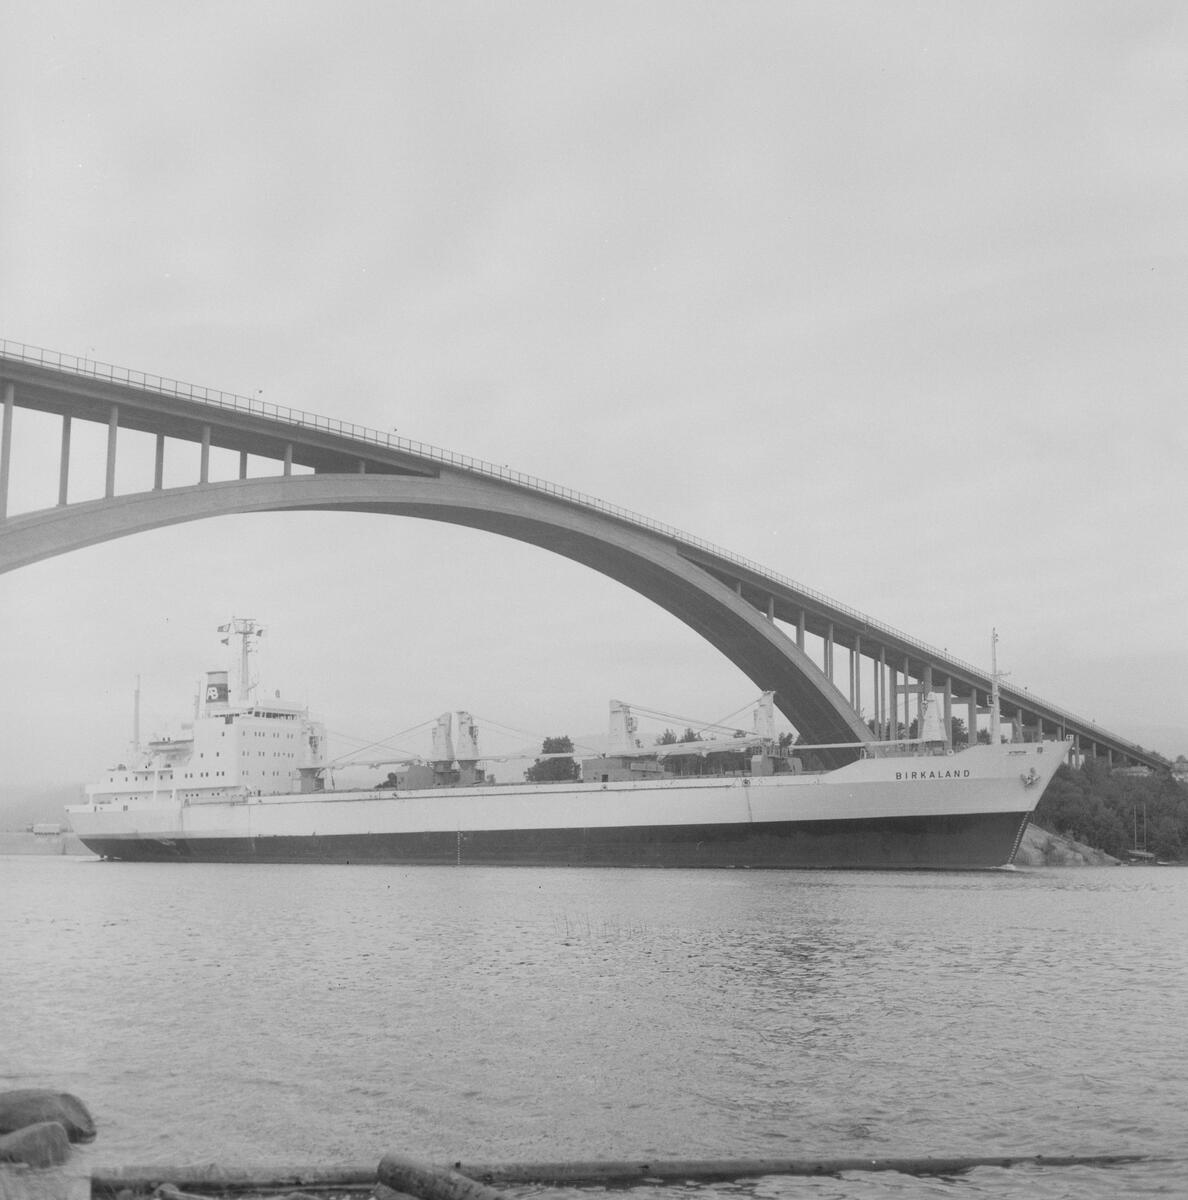 Fartyget Birkaland vid Sandöbron

